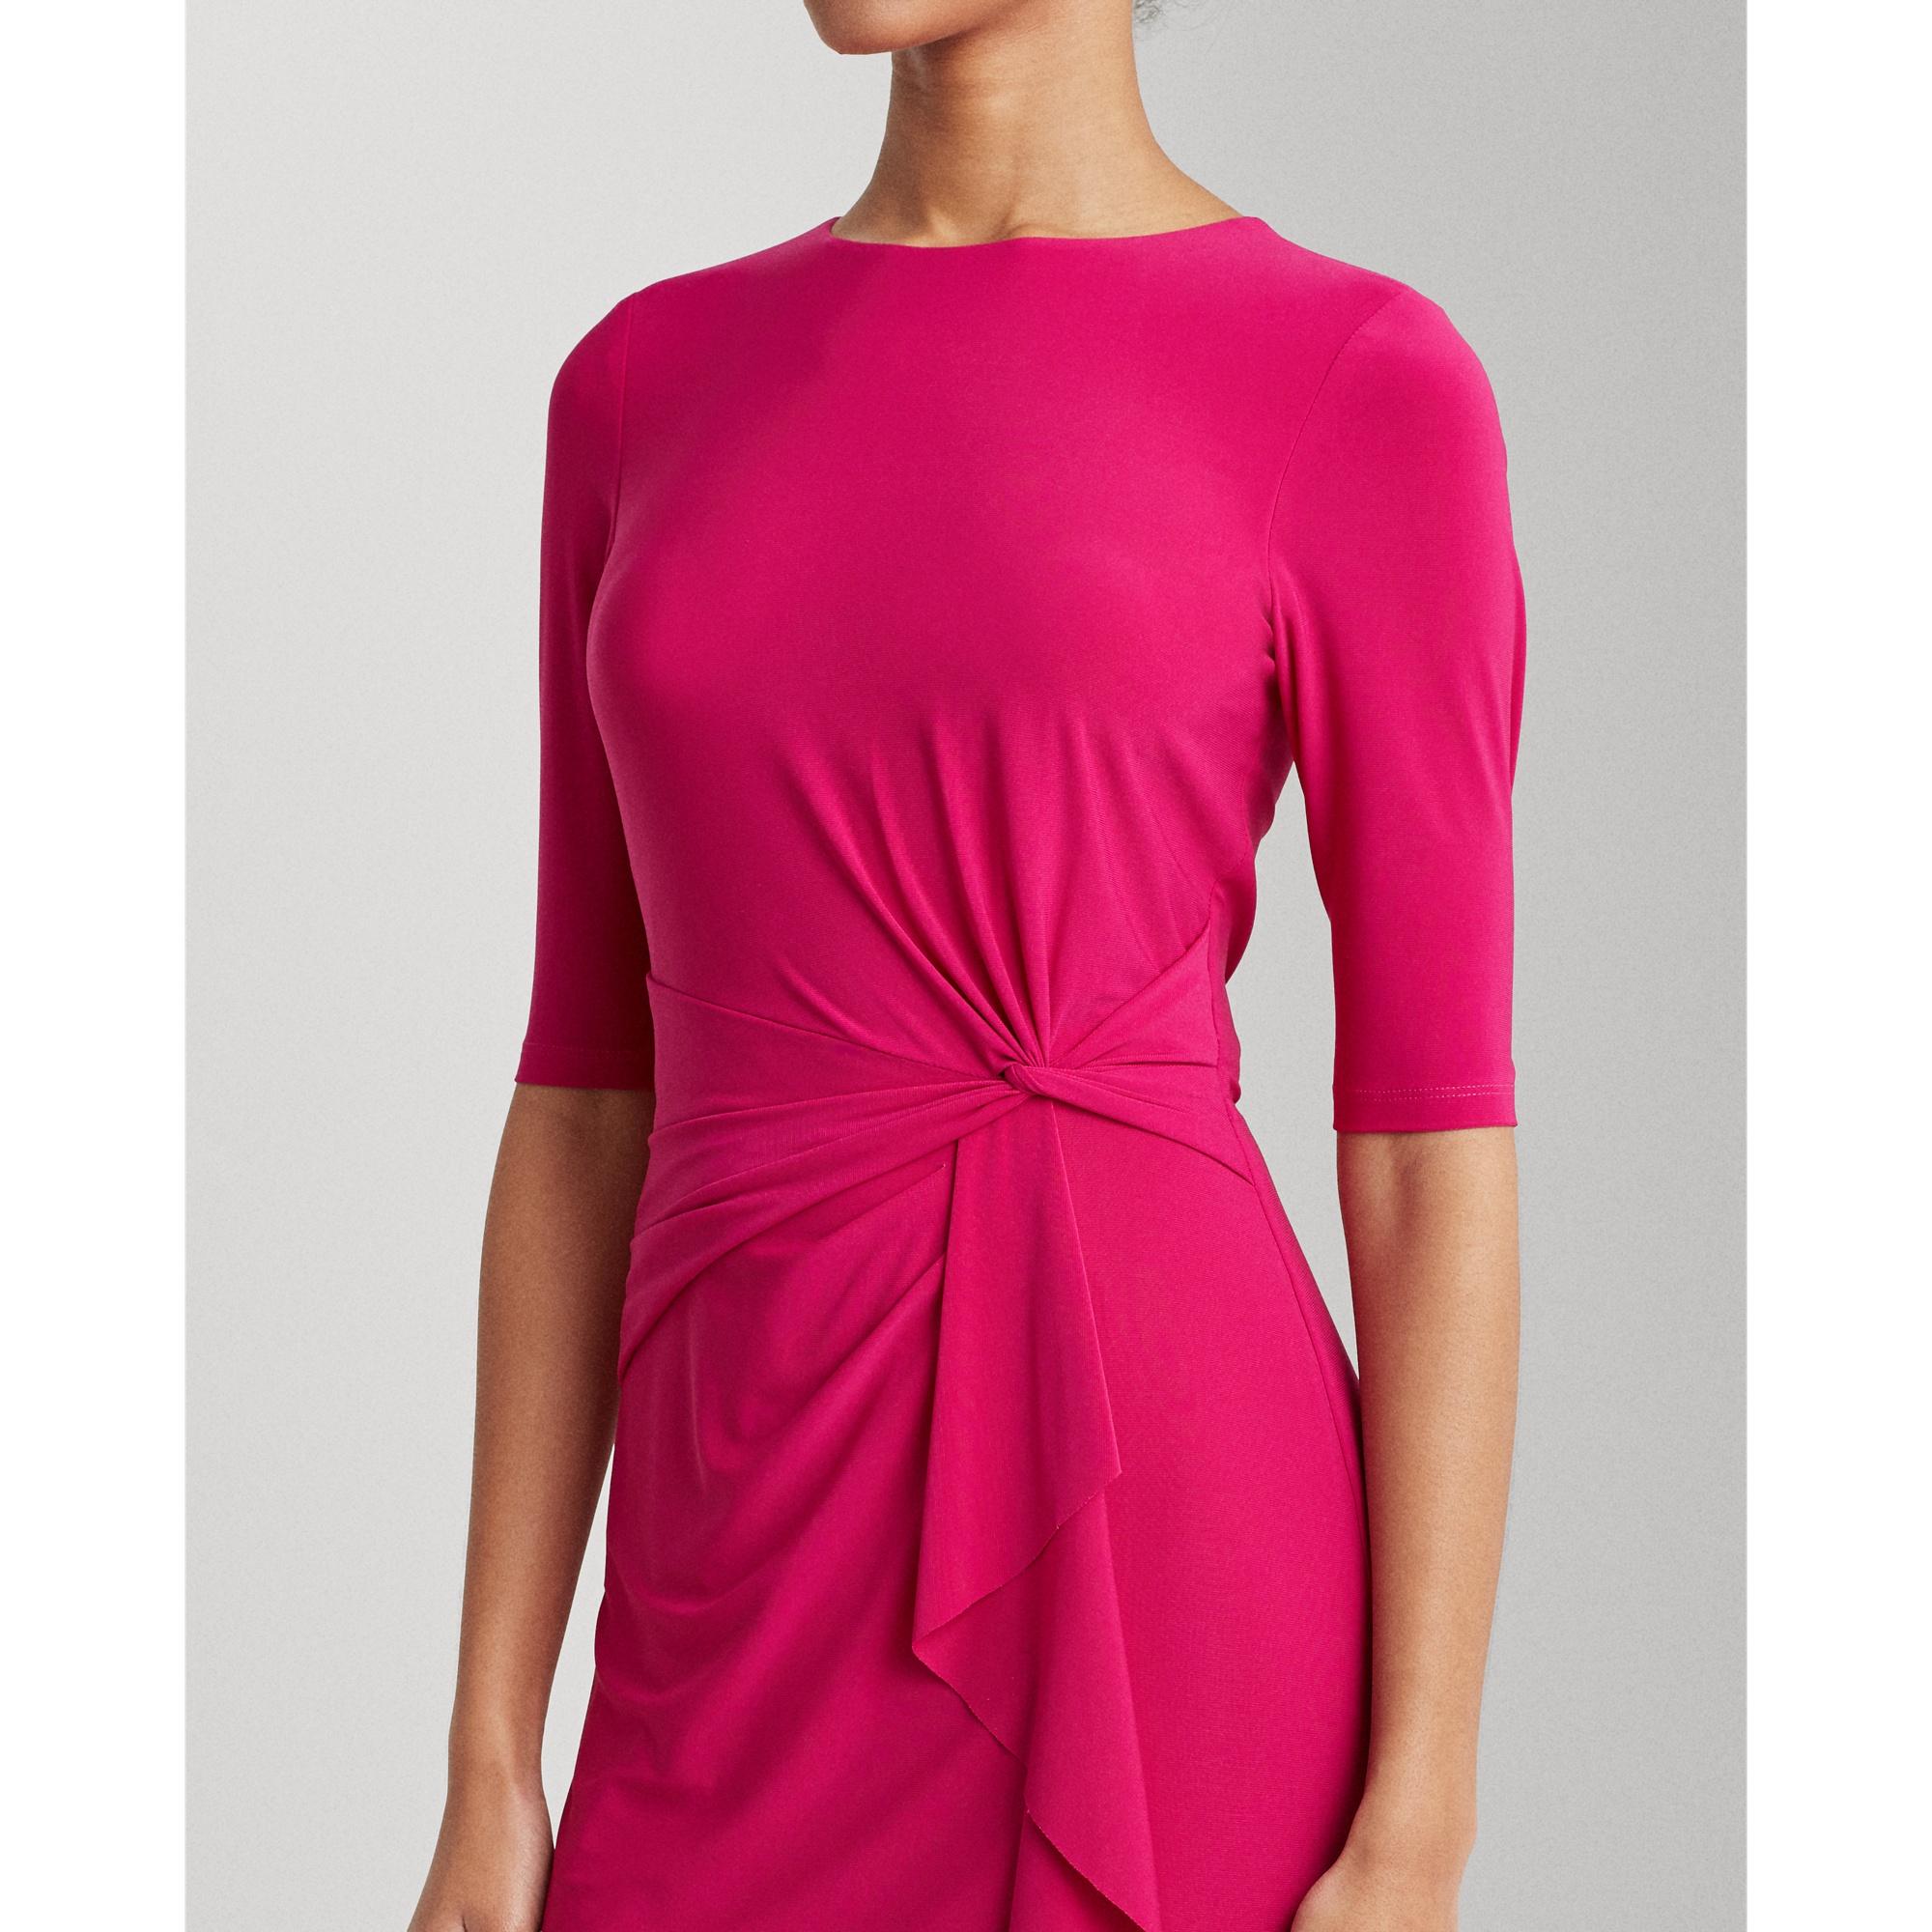 Ralph Lauren Twisted-knot Jersey Dress in Bright Fuchsia (Pink) - Lyst